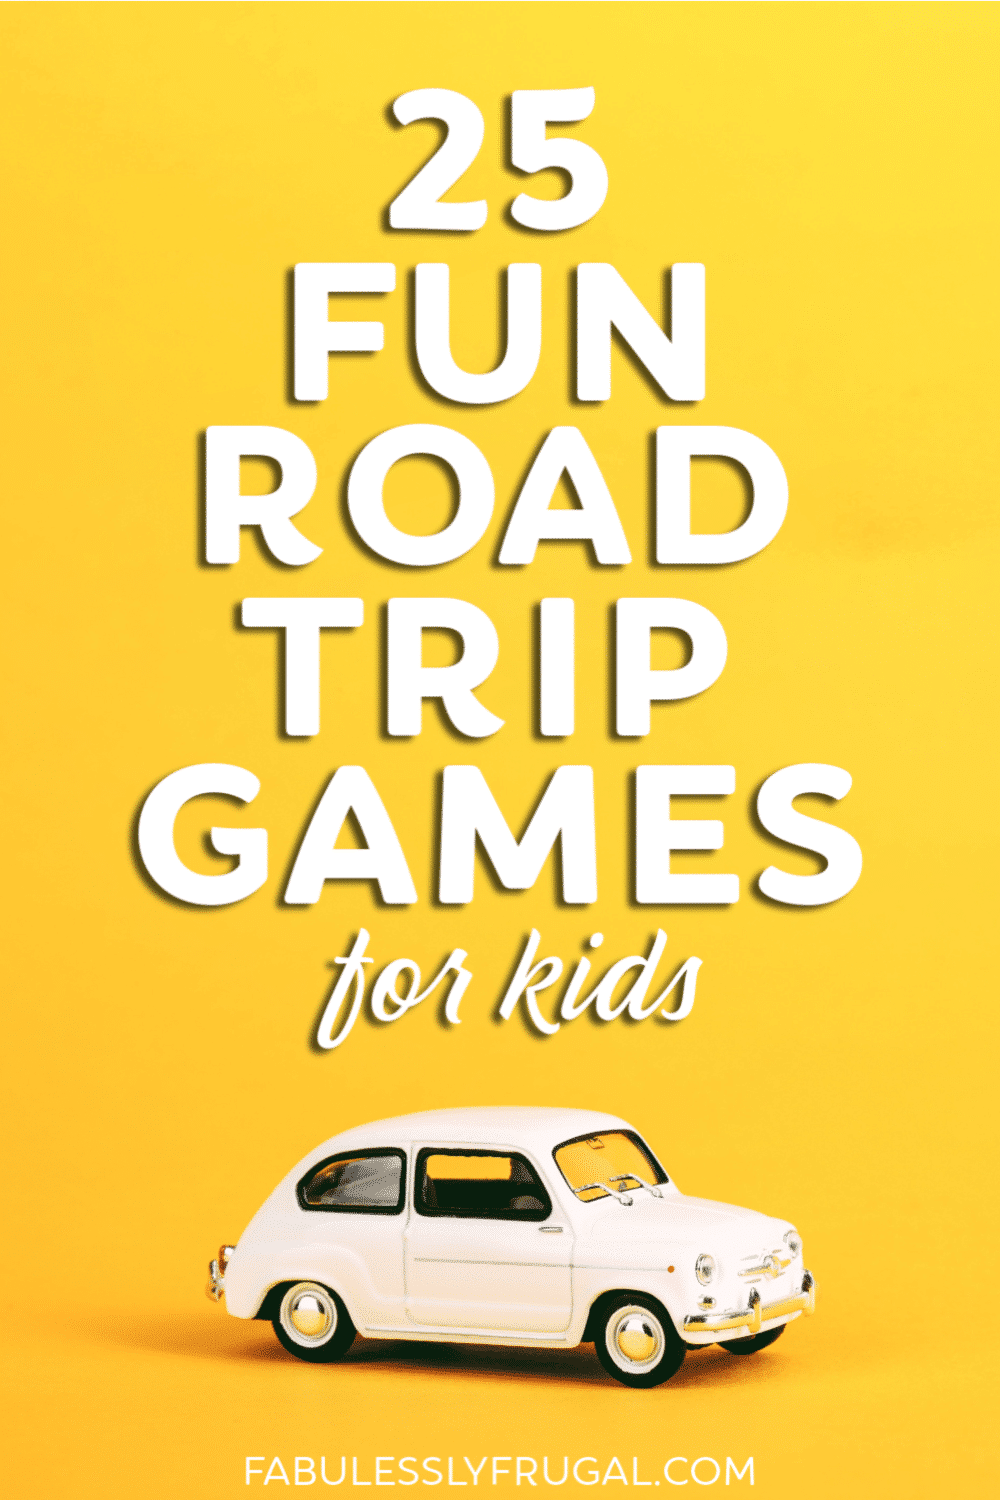 Fun road trip games for kids